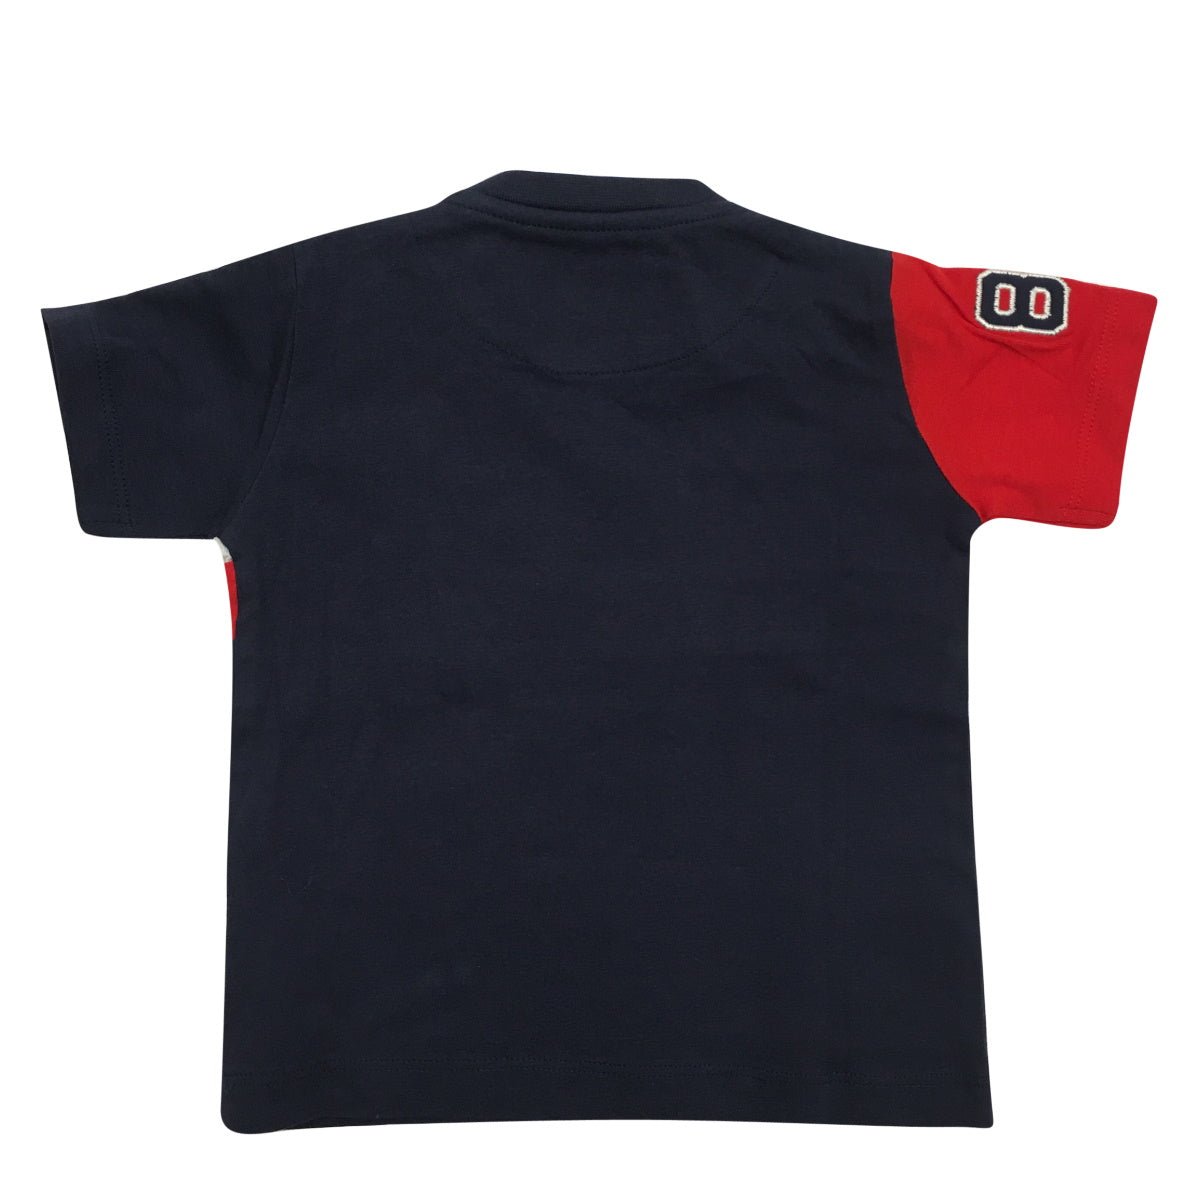 Aspen Polo Club T-shirt 1076M0068 BASIC